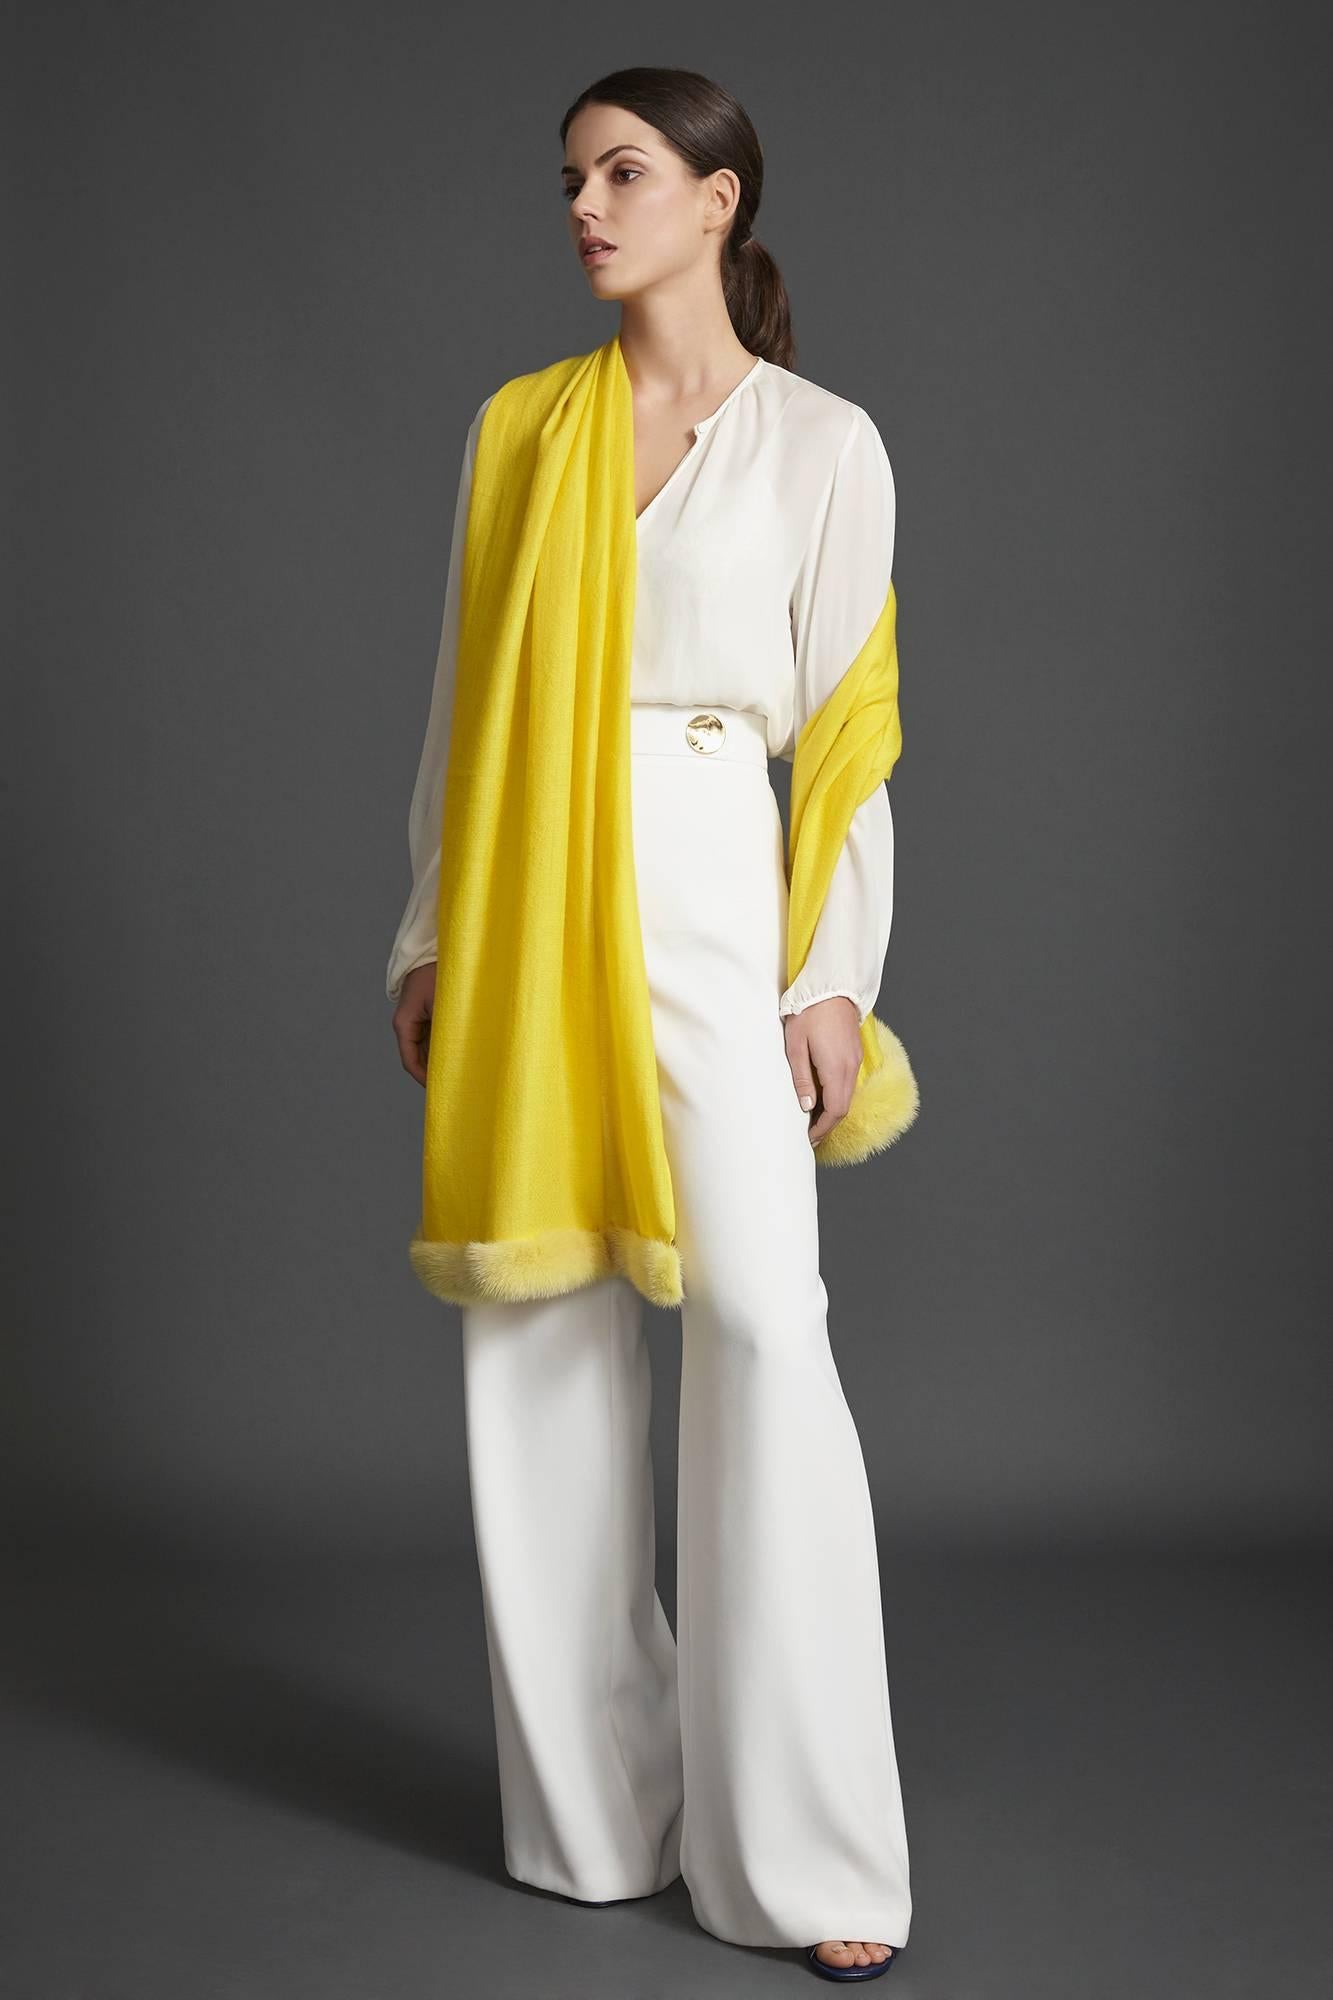 Women's or Men's Verheyen London Handwoven Mink Fur Trimmed Cashmere Yellow Shawl 